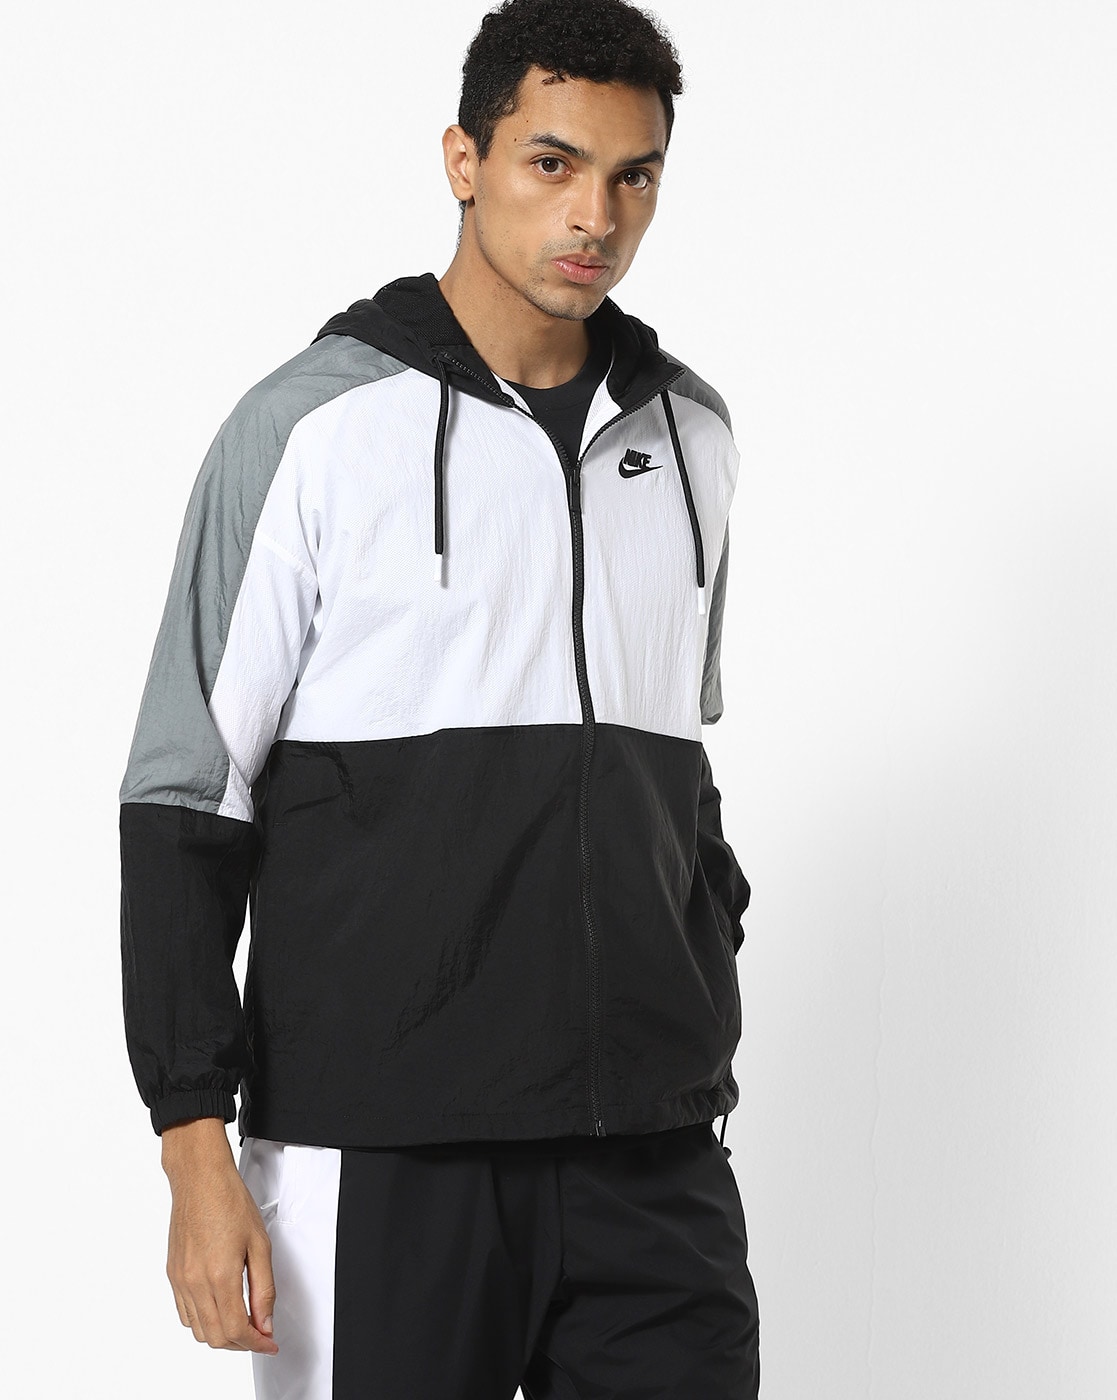 Rare Nike Windrunner Jacket Windbreaker Nylon Glanz Black White Gray Small  | eBay